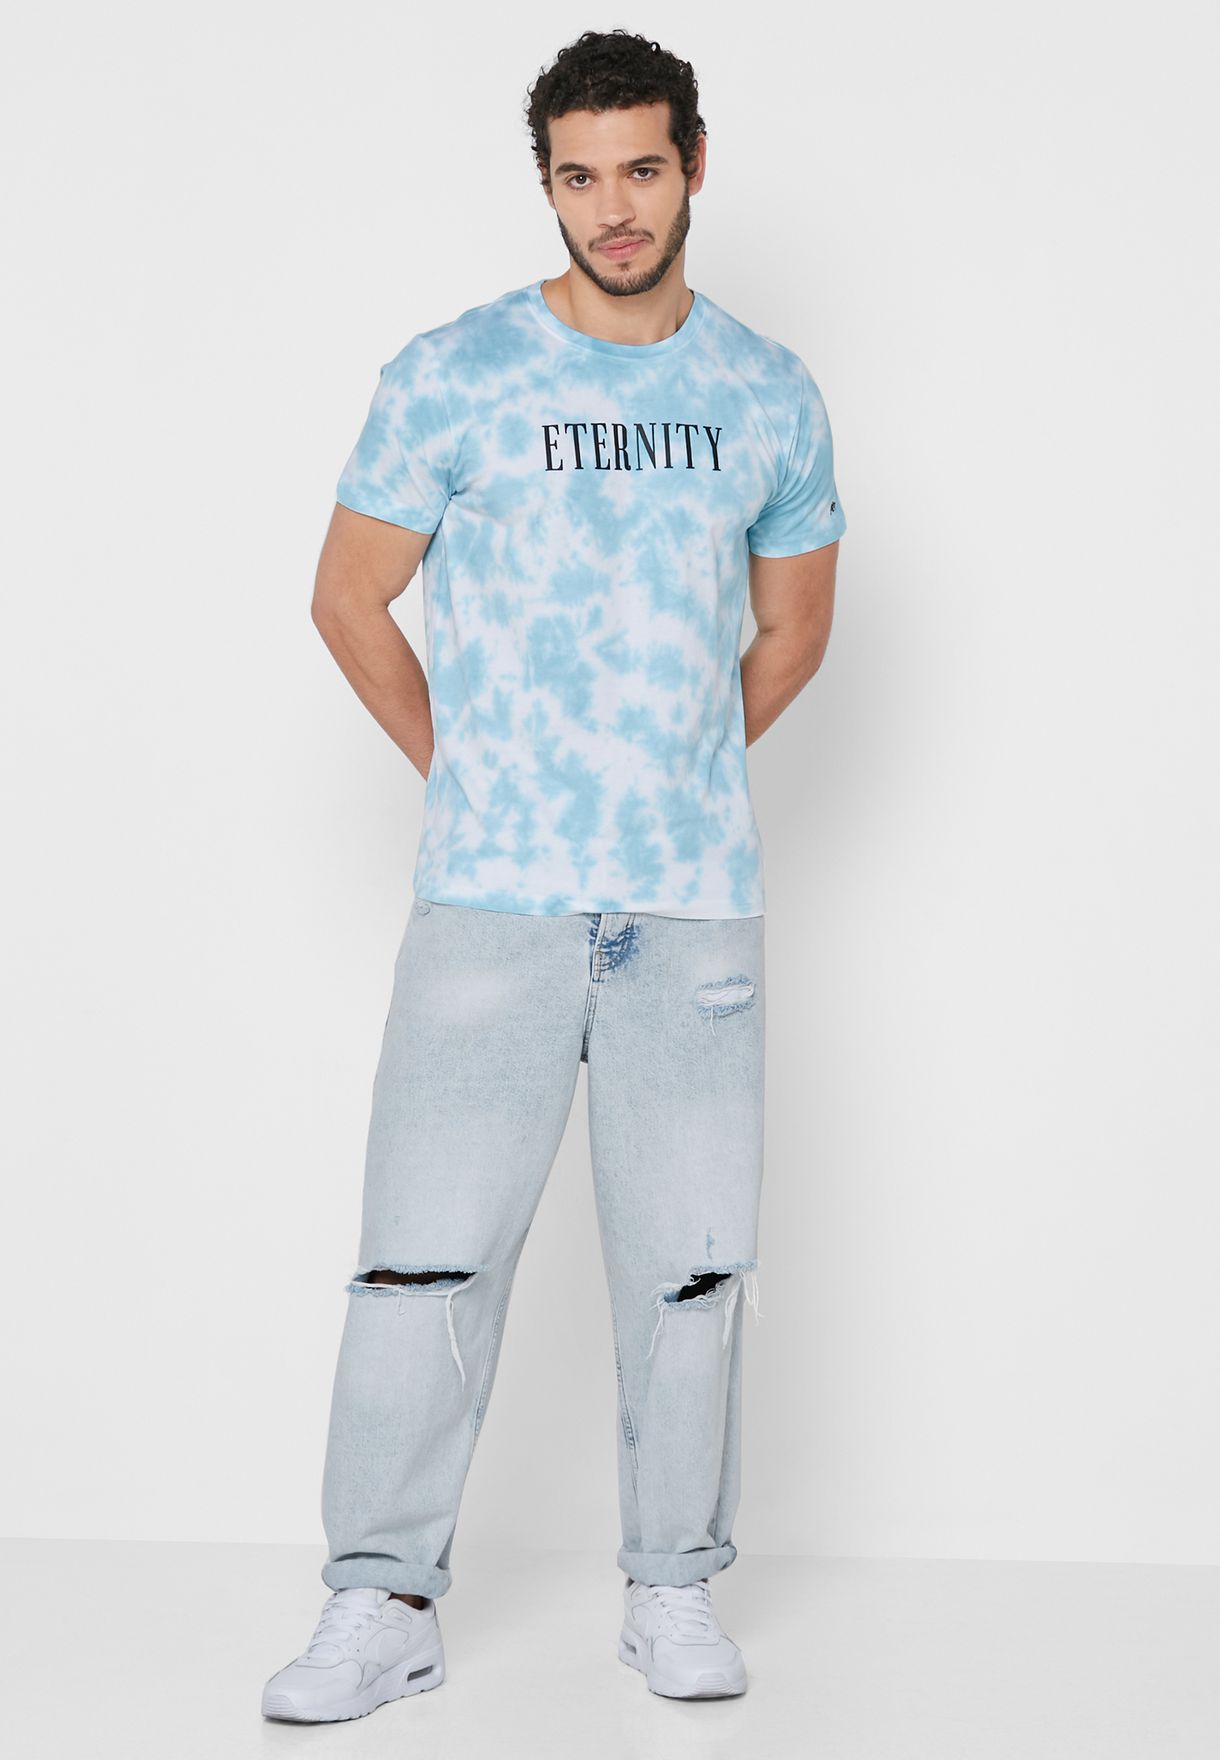 Eternity Crew Neck T-Shirt